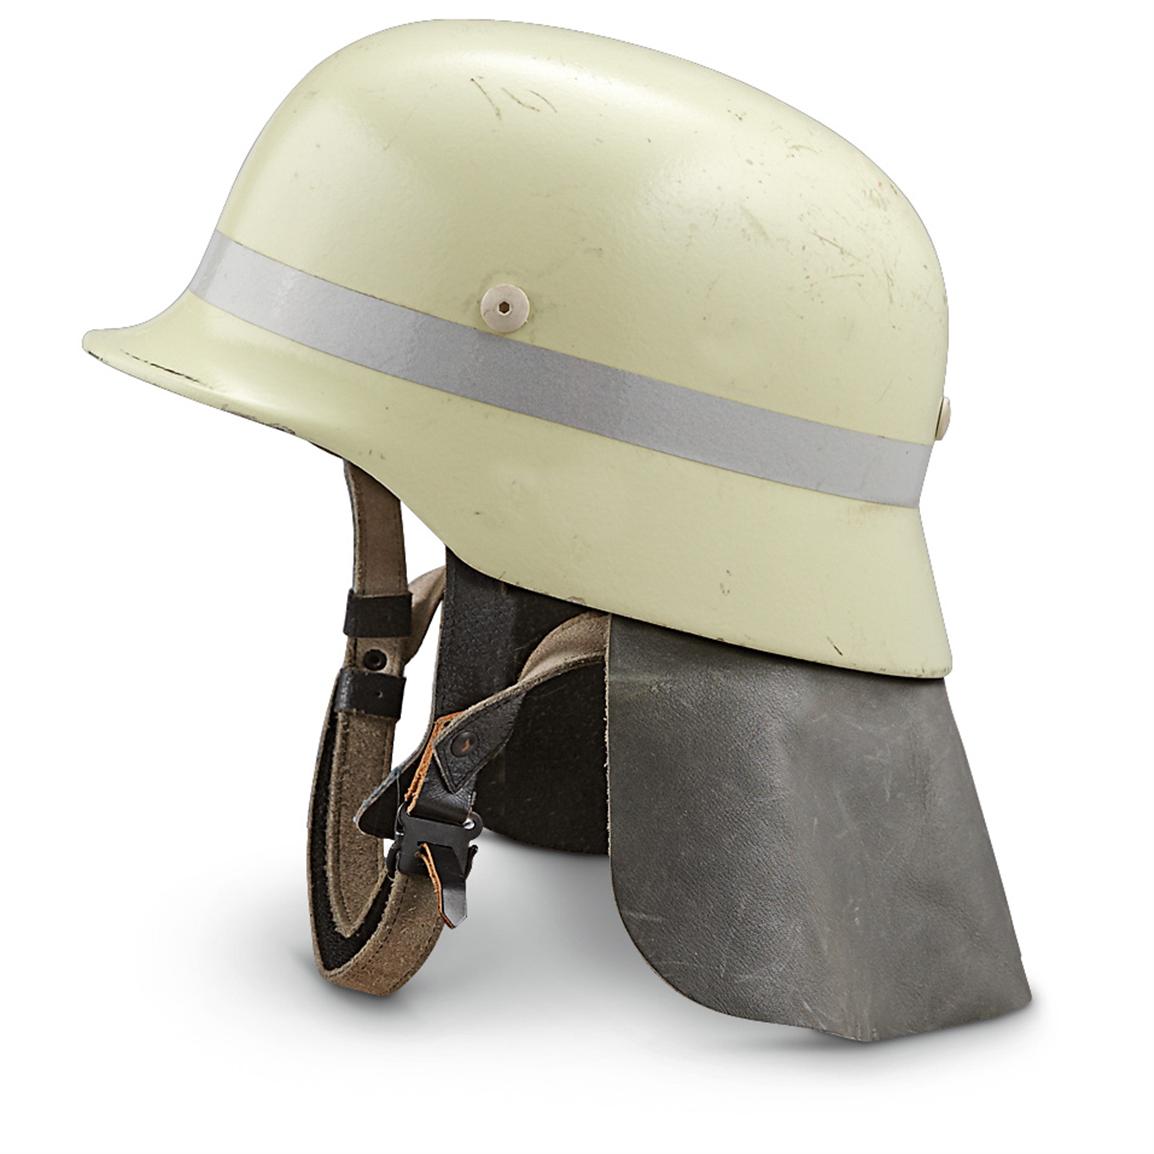 Used German WWII-style "Glowing" Fire Helmet - 293898, Helmets & Accessories at Sportsman's Guide